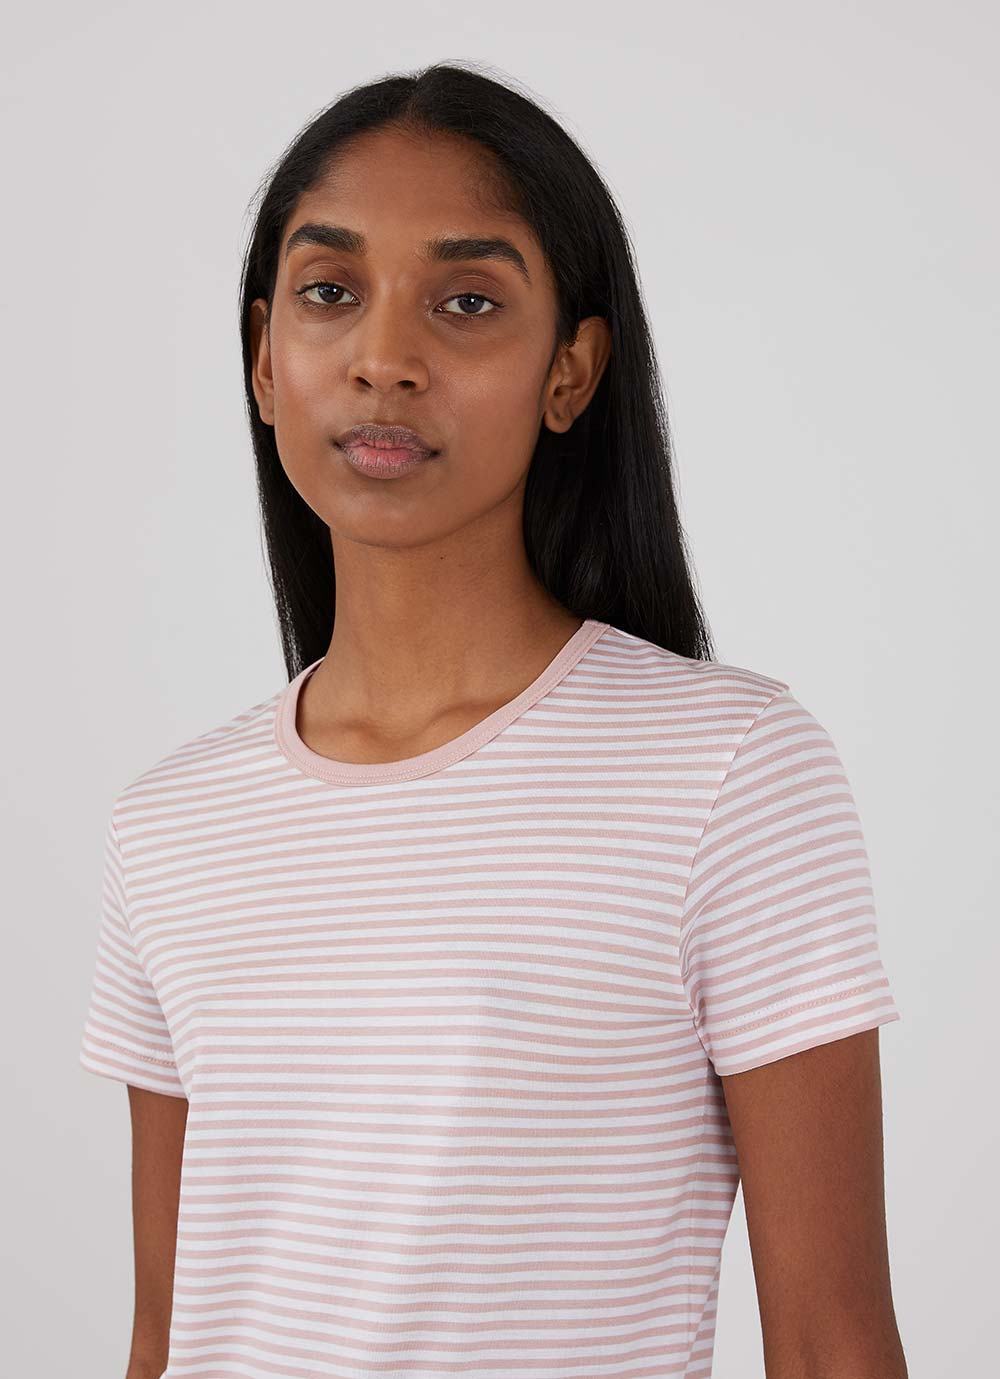 Women's Classic T-shirt in Dusty Pink/White English Stripe